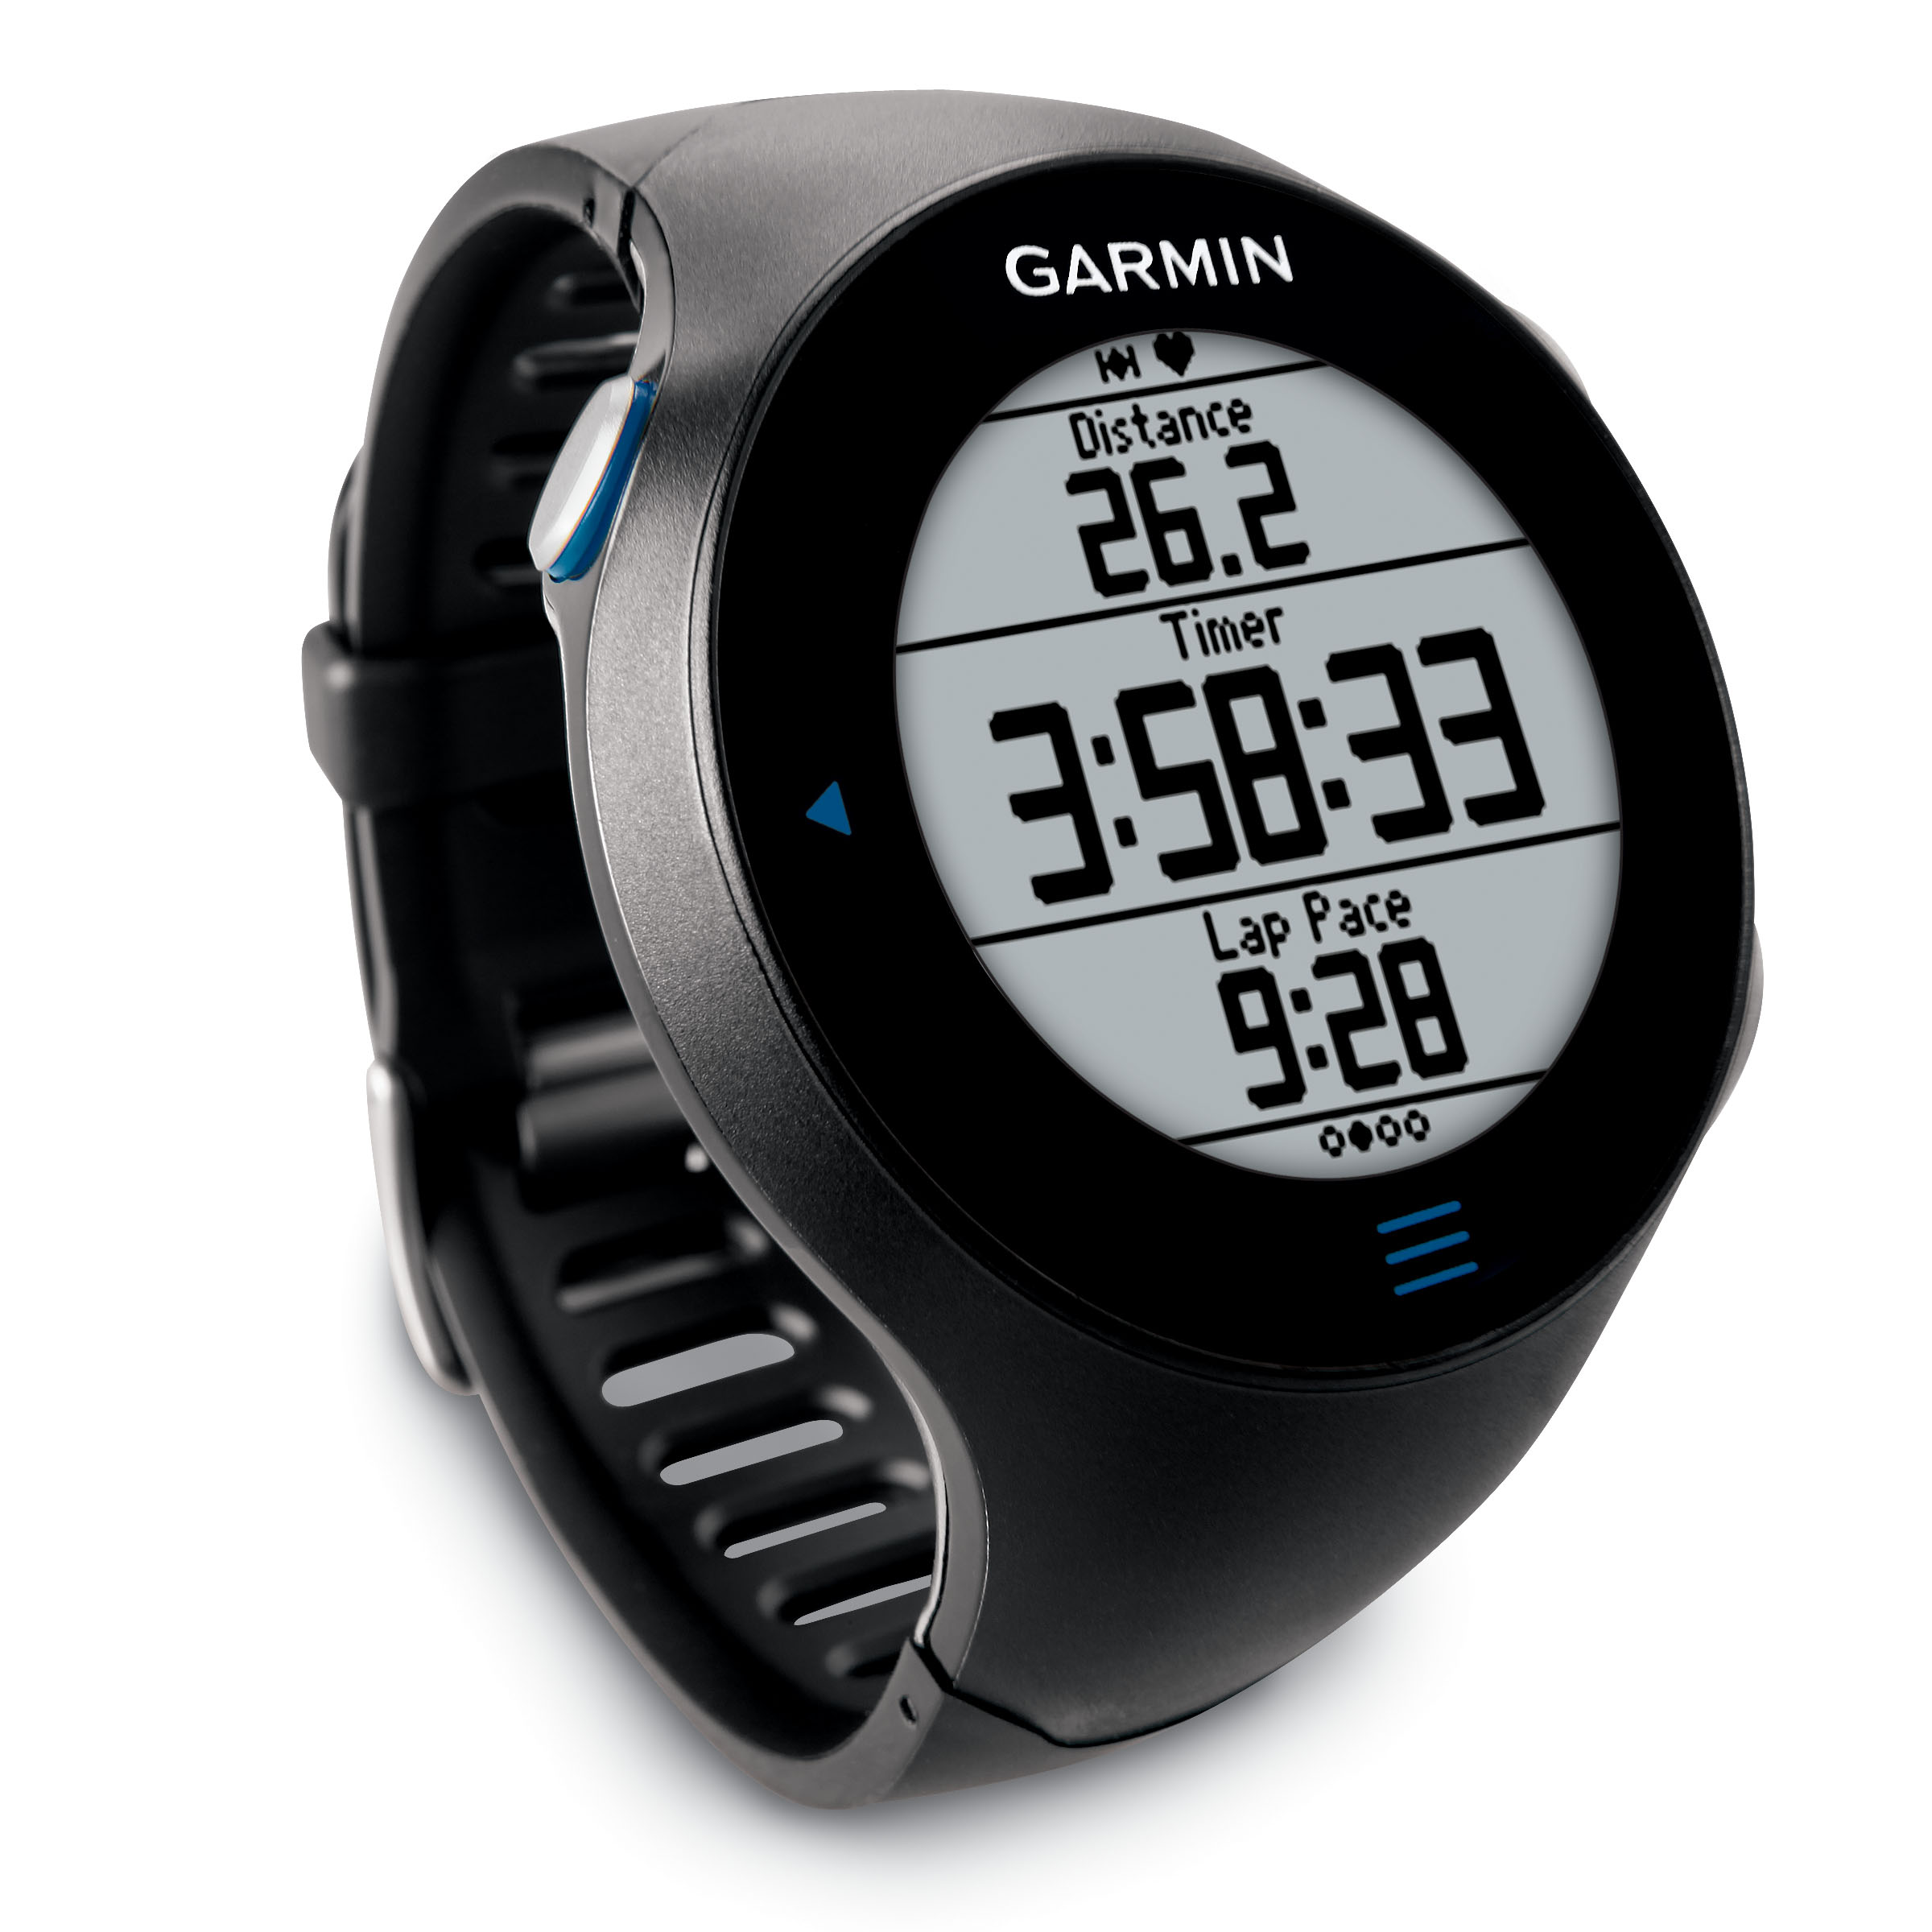 Garmin® adds its first touchscreen GPS watch to family - Garmin Blog